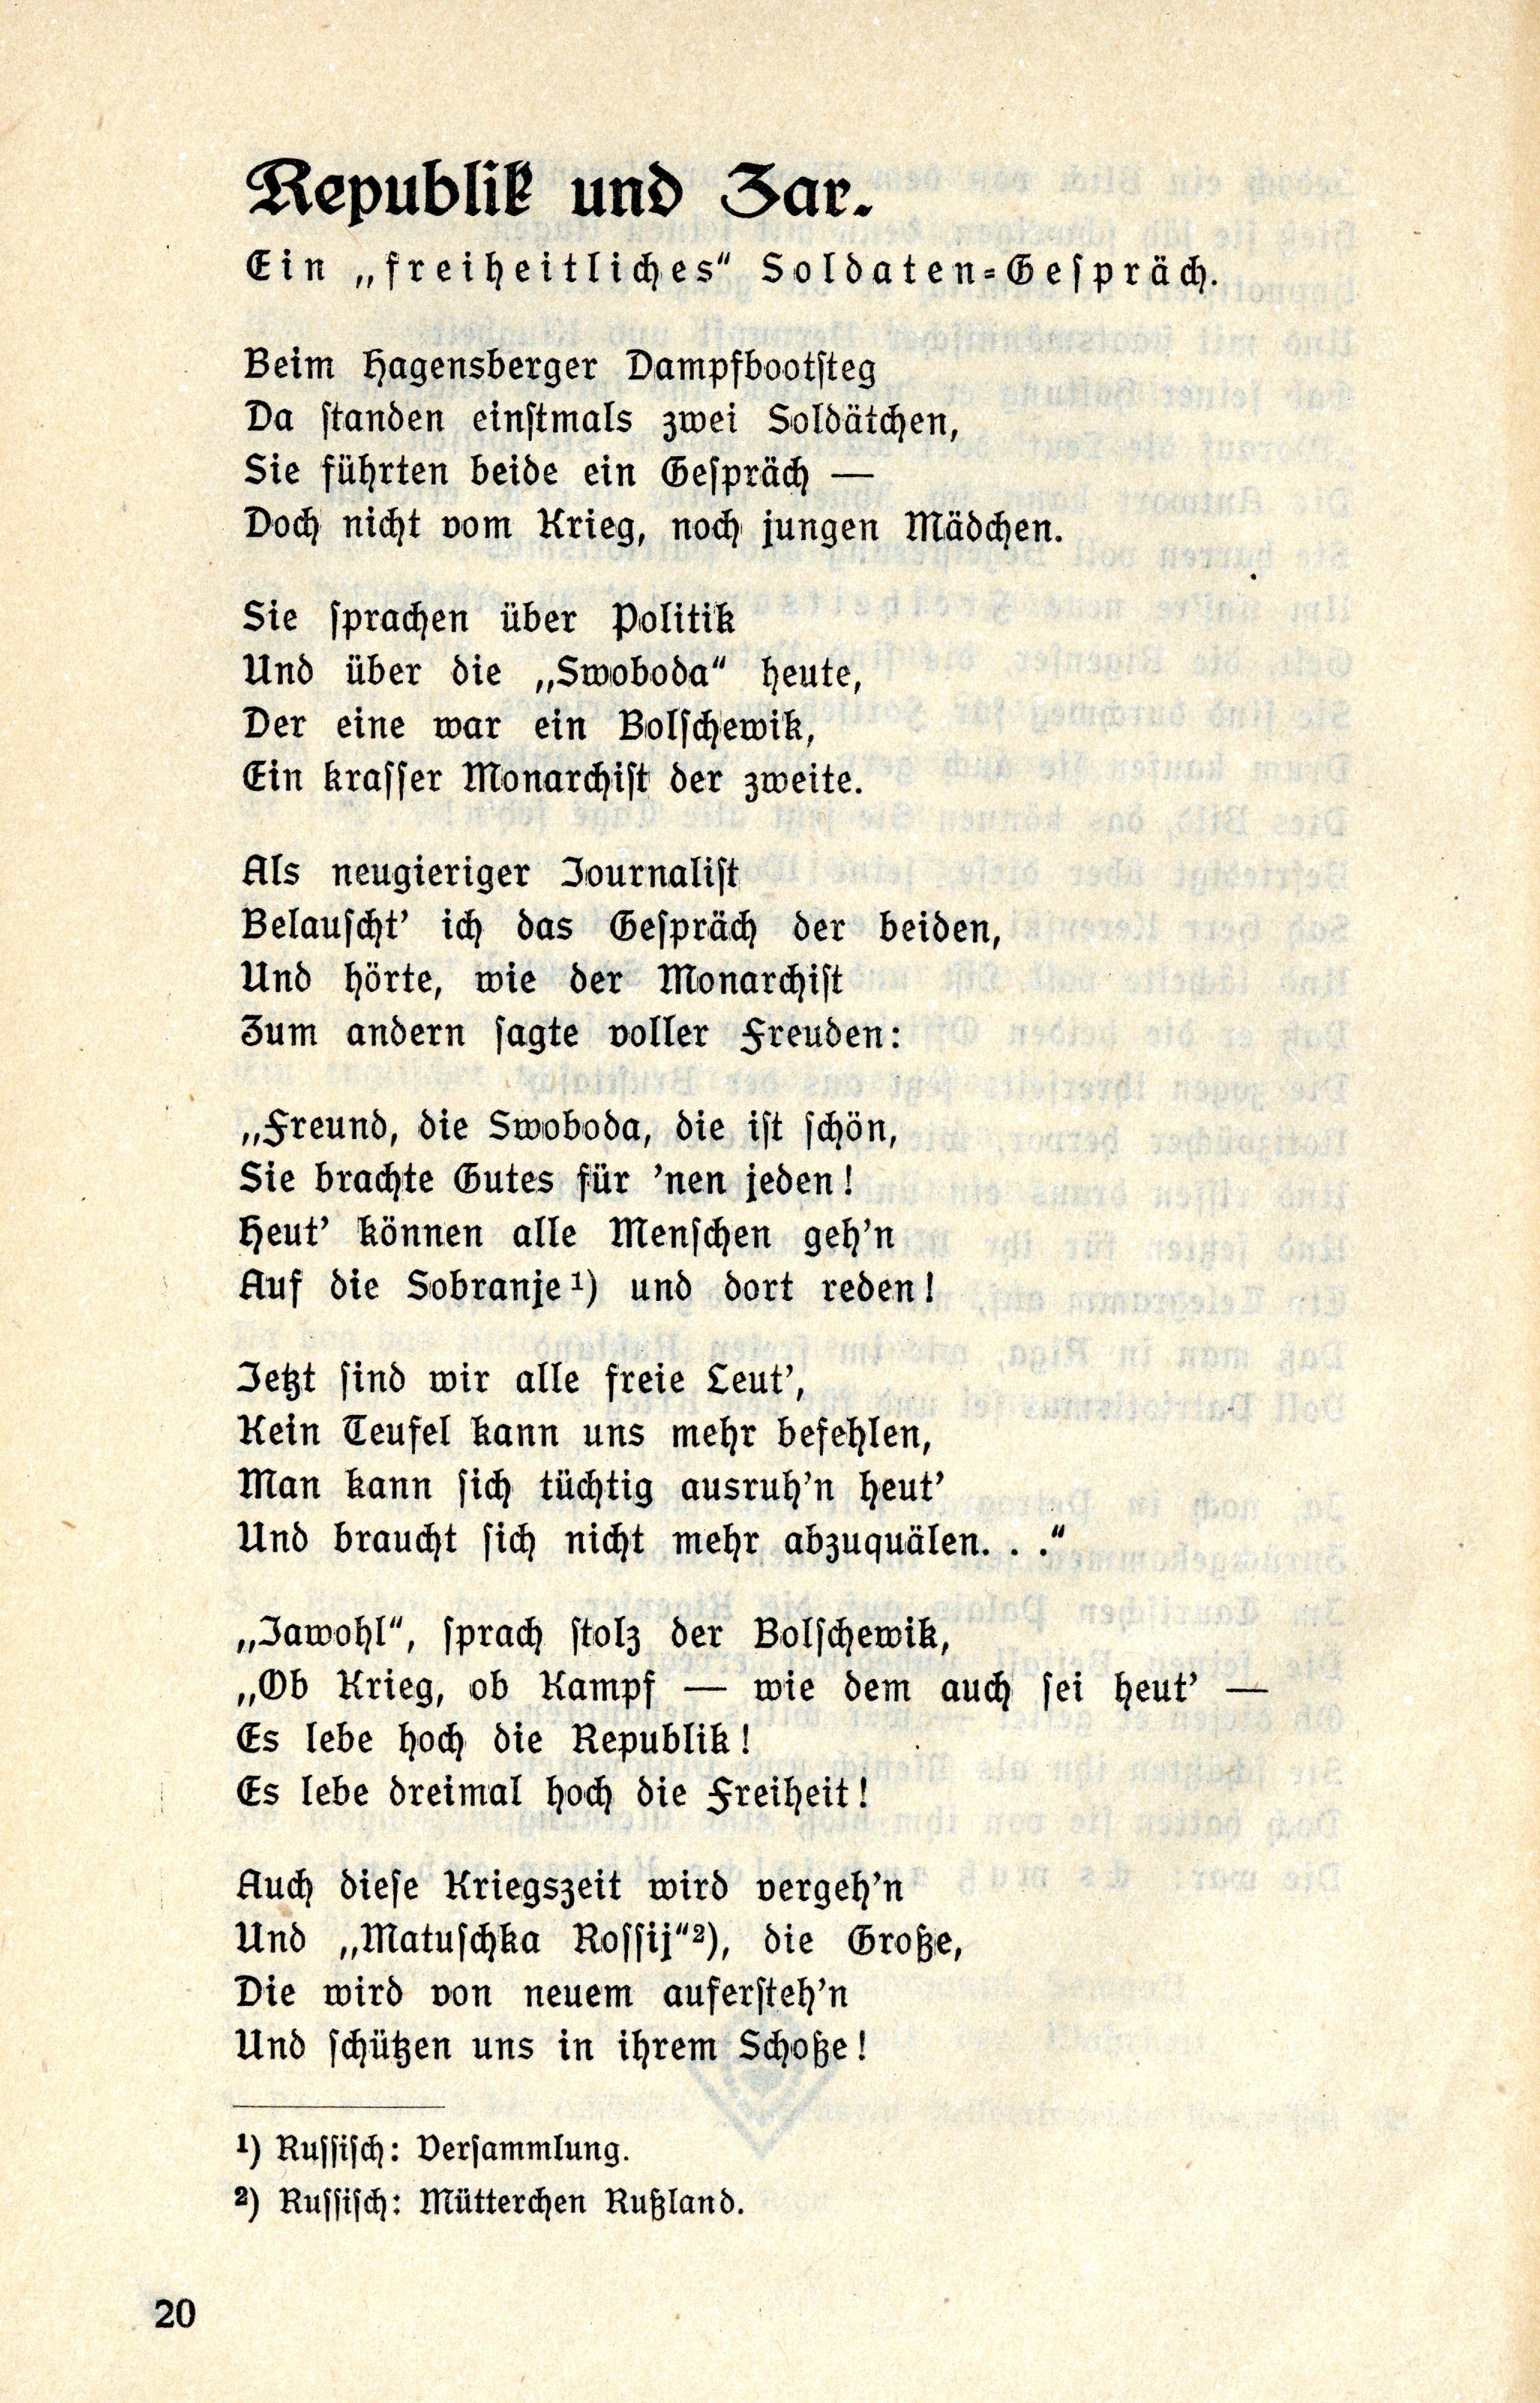 Der Balte im Maulkorb (1917) | 21. (20) Основной текст